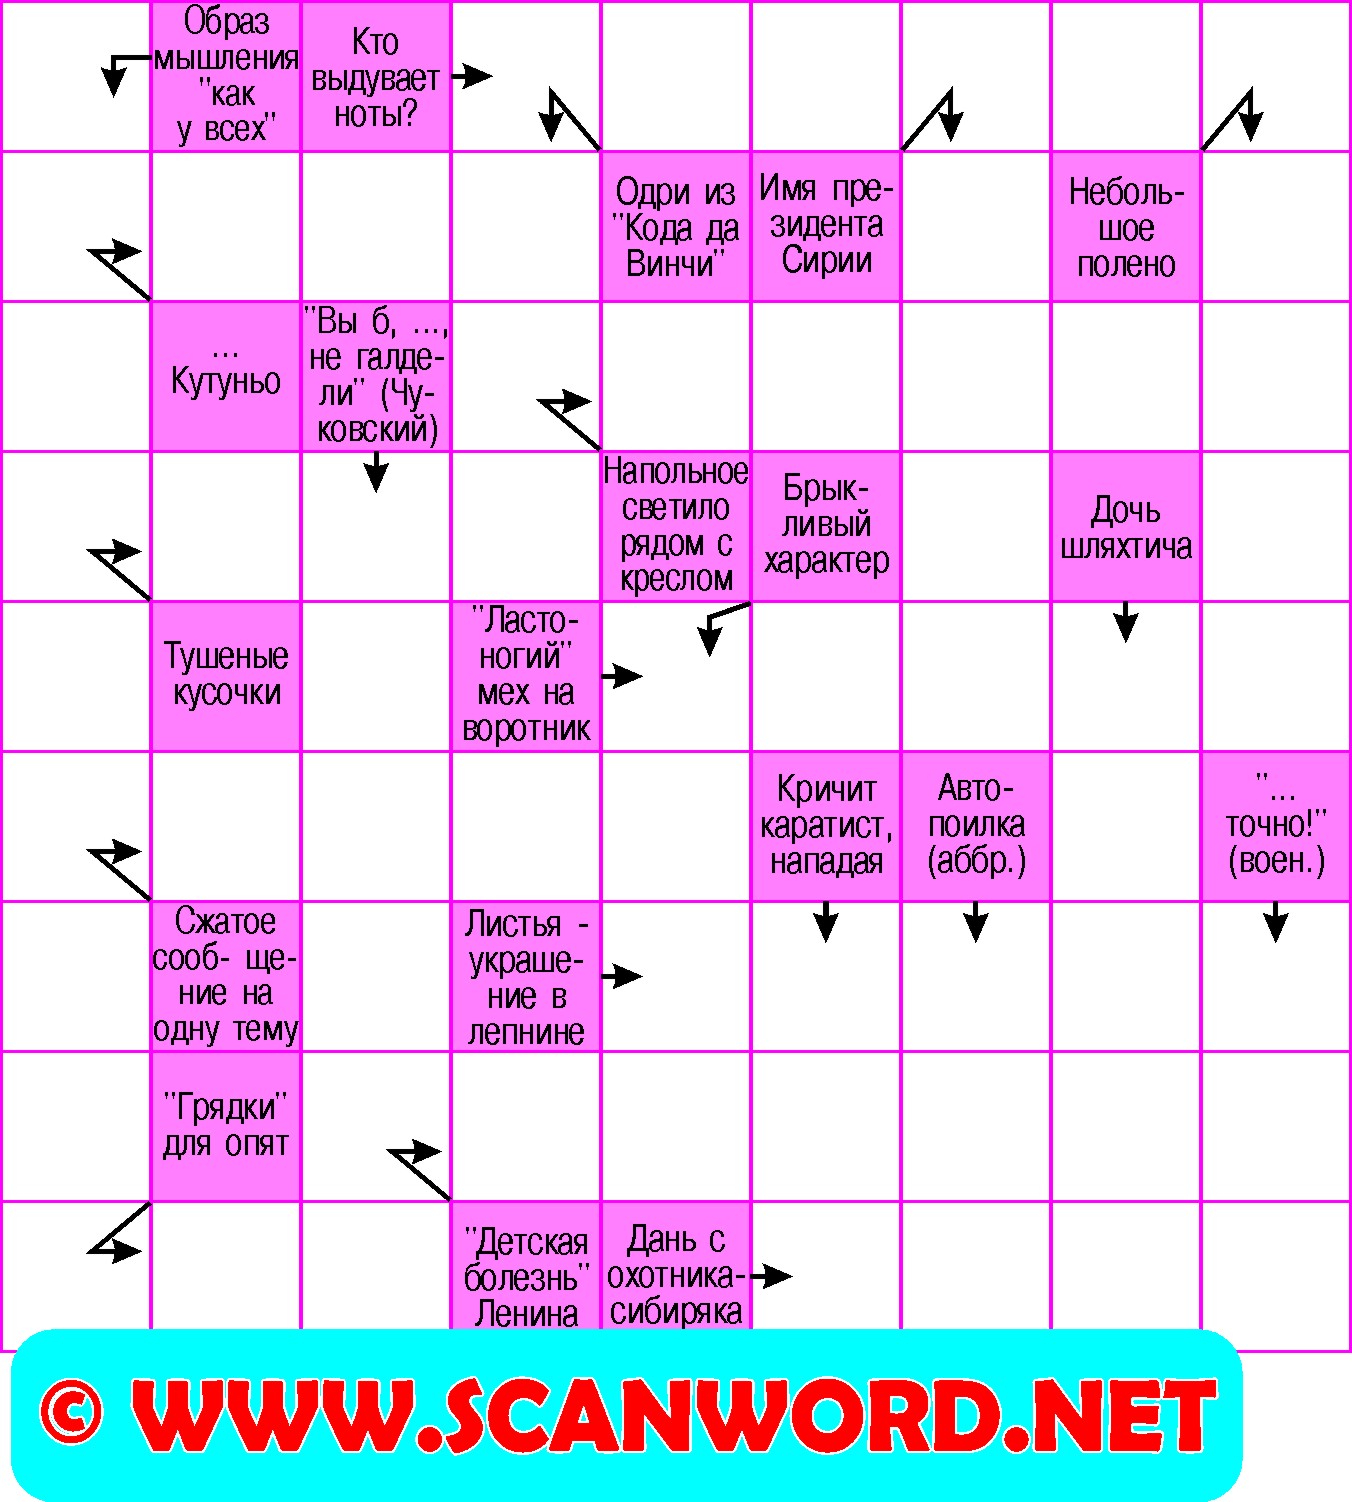 Scanword net